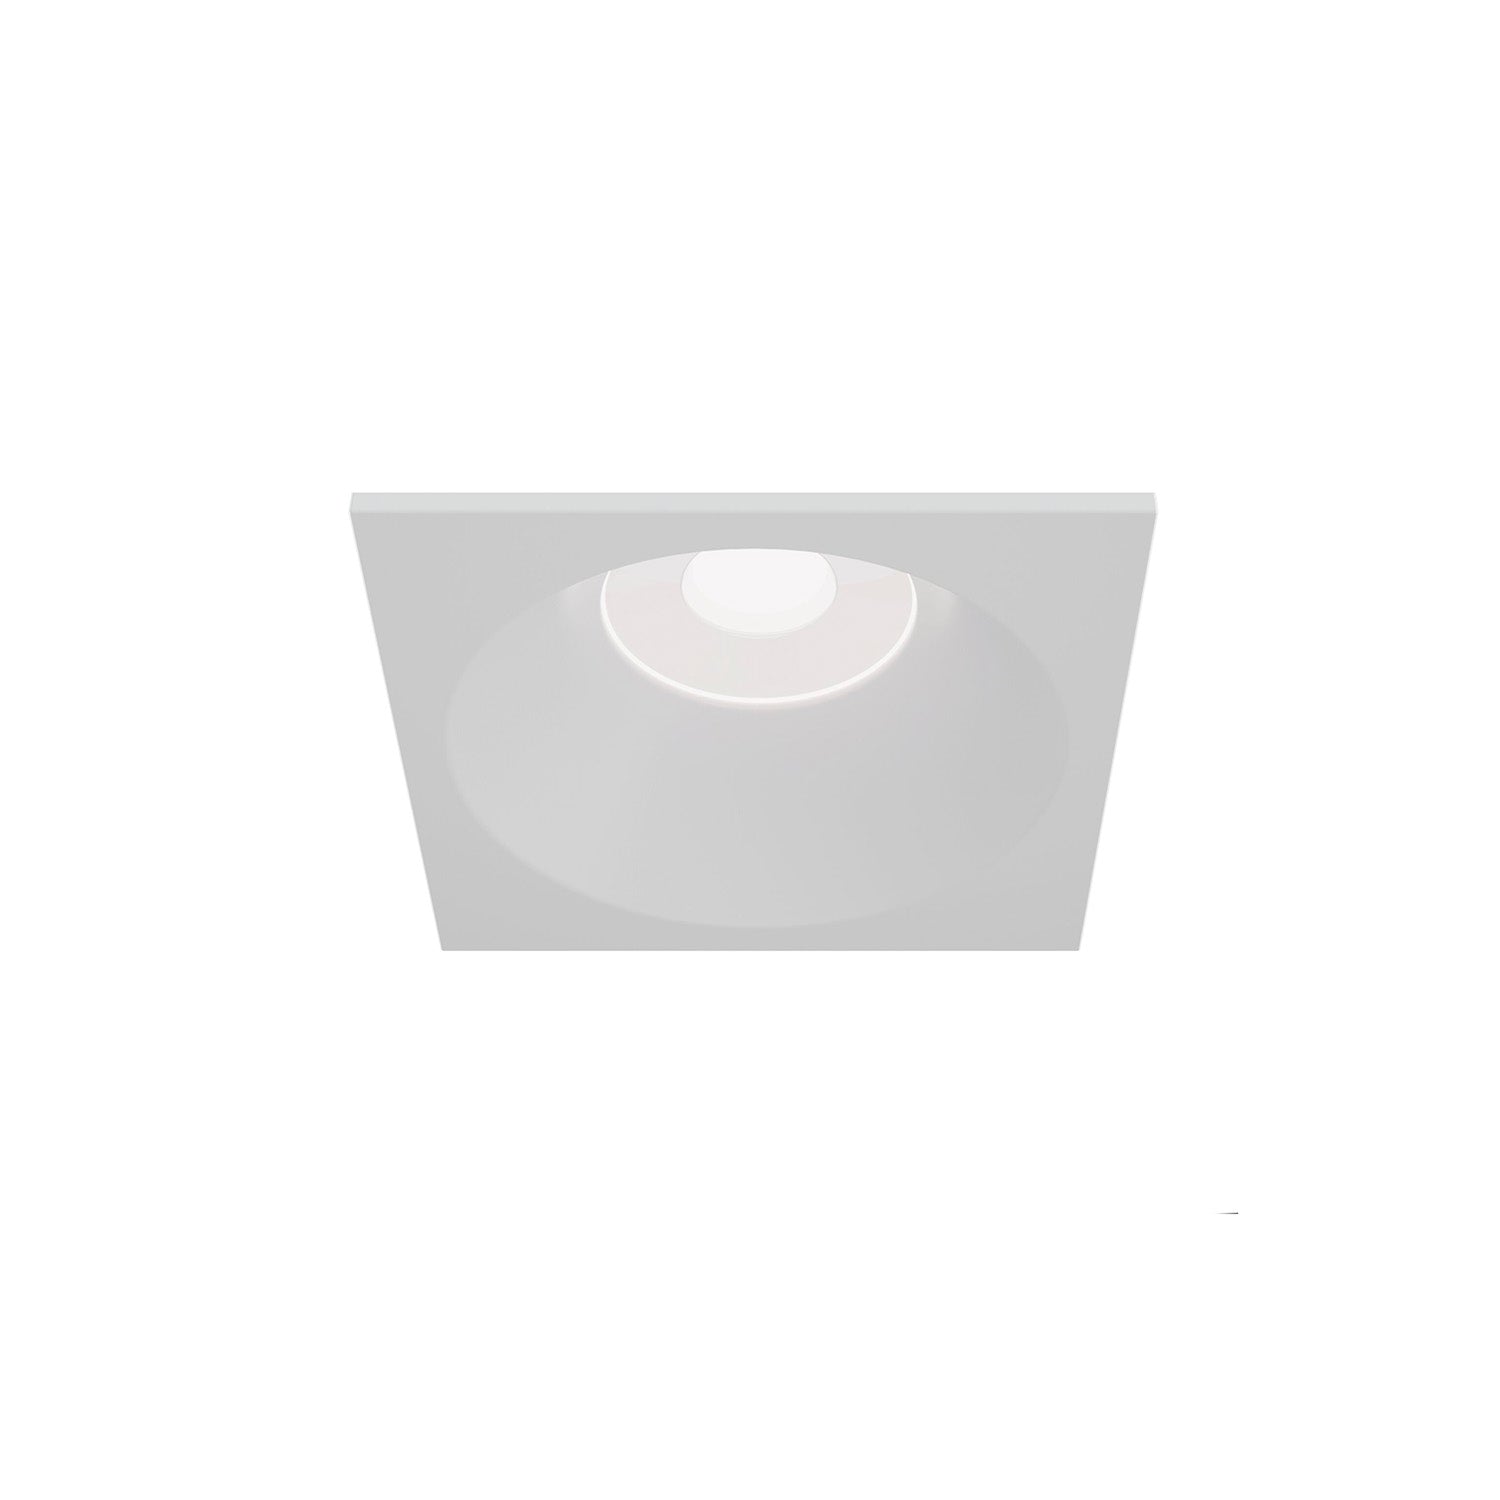 ZOOM B - Waterproof outdoor square recessed spotlight, black or white, 85mm